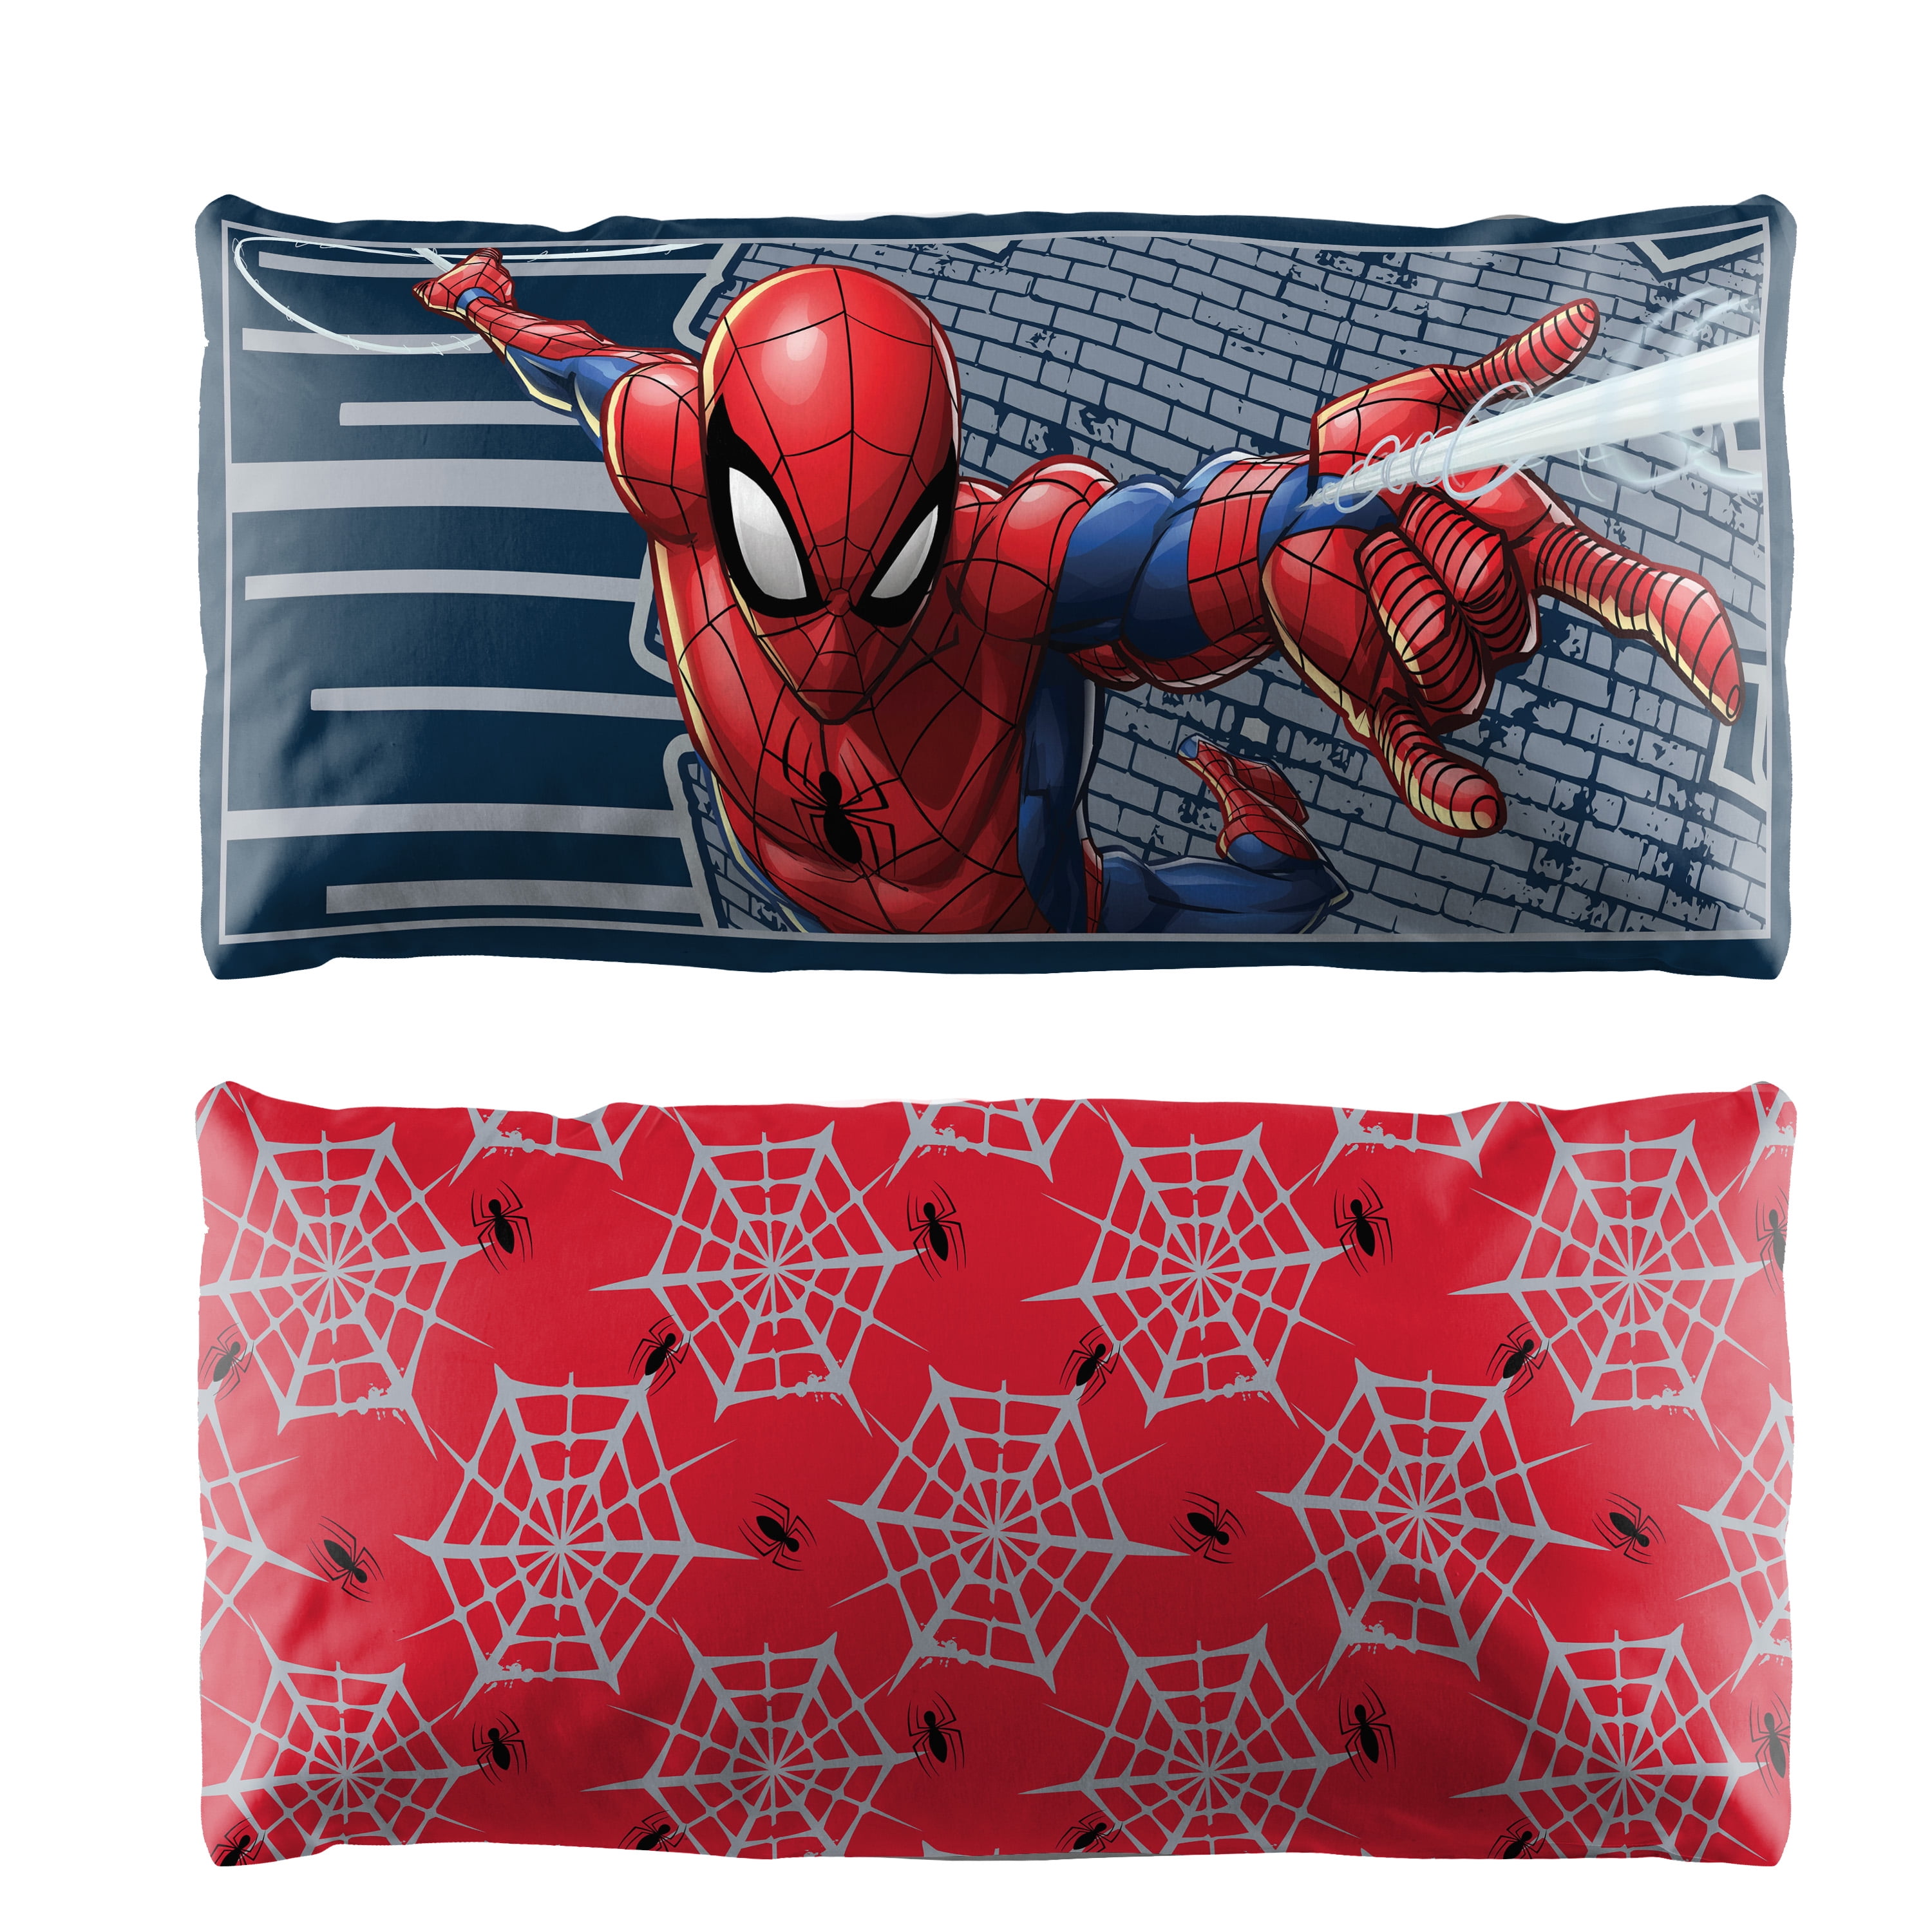 Details about   Spiderman Pillow Case Red Blue Spider Sense 